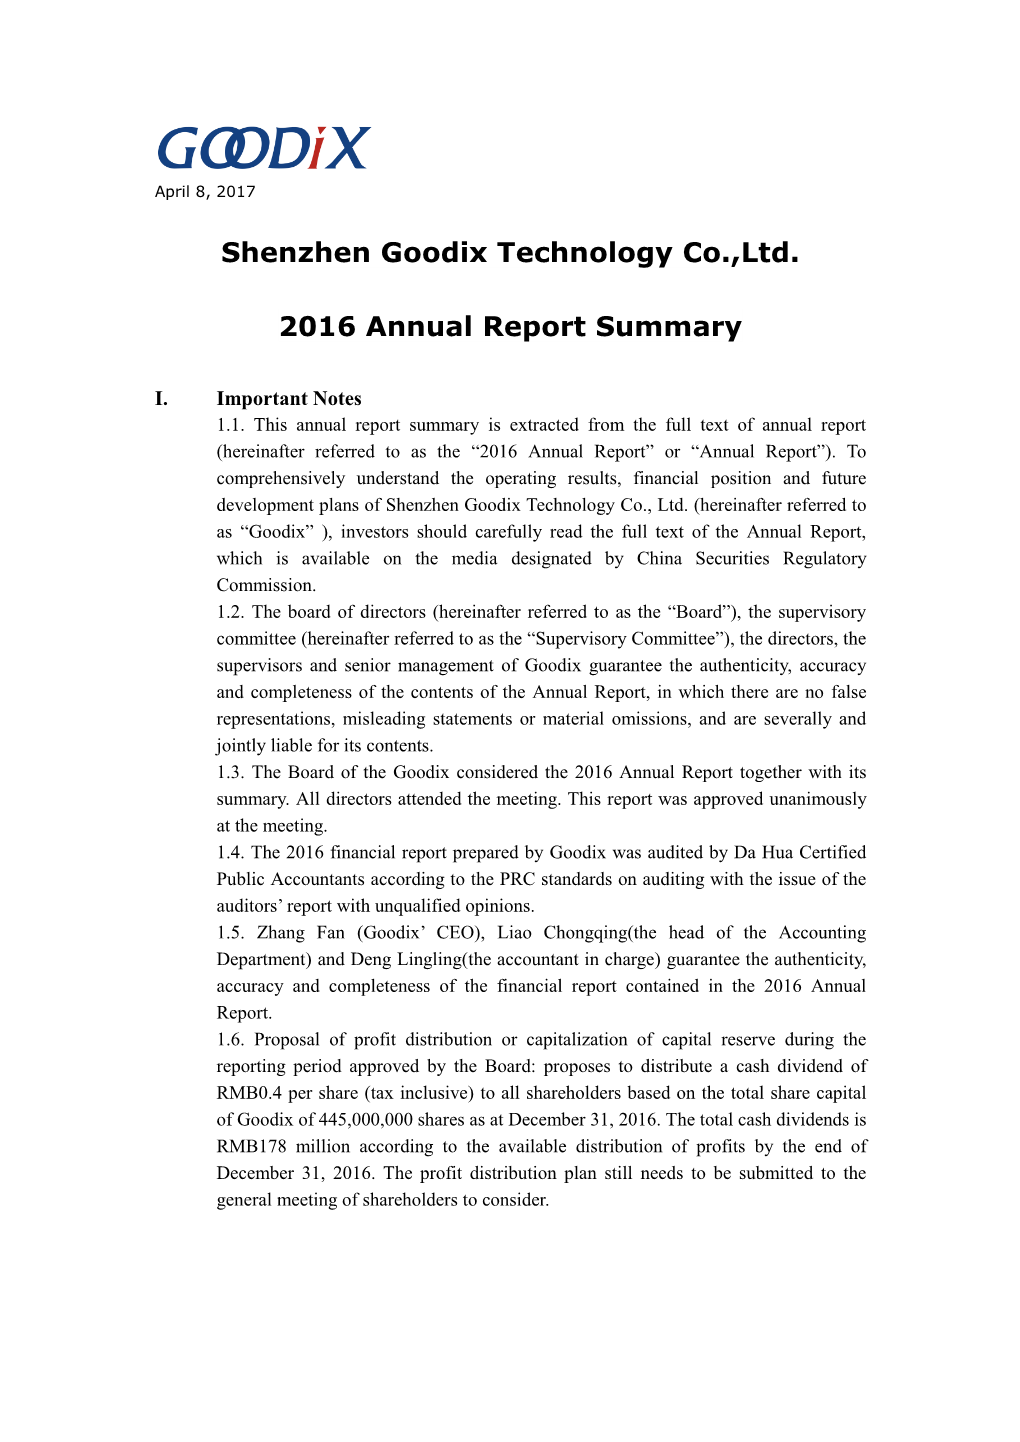 Shenzhen Goodix Technology Co.,Ltd. 2016 Annual Report